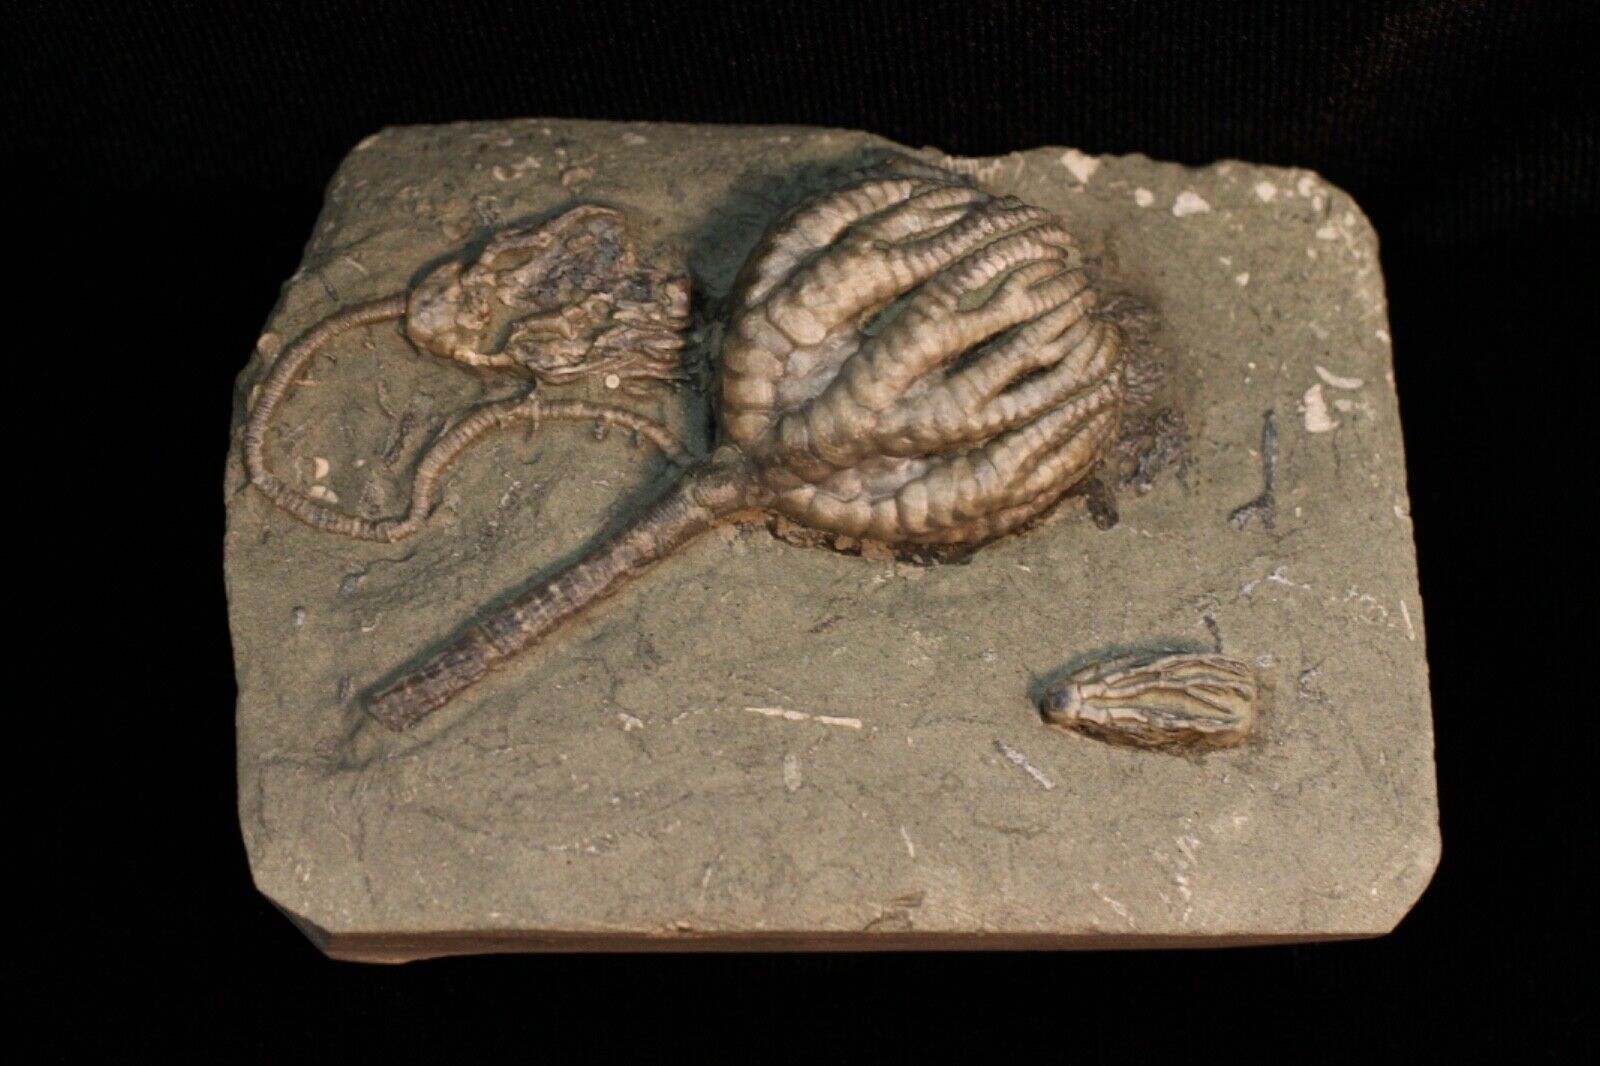 Three Terrific Fossil Crinoids on Gorgeous Mini-Plate, Crawfordsville, Indiana